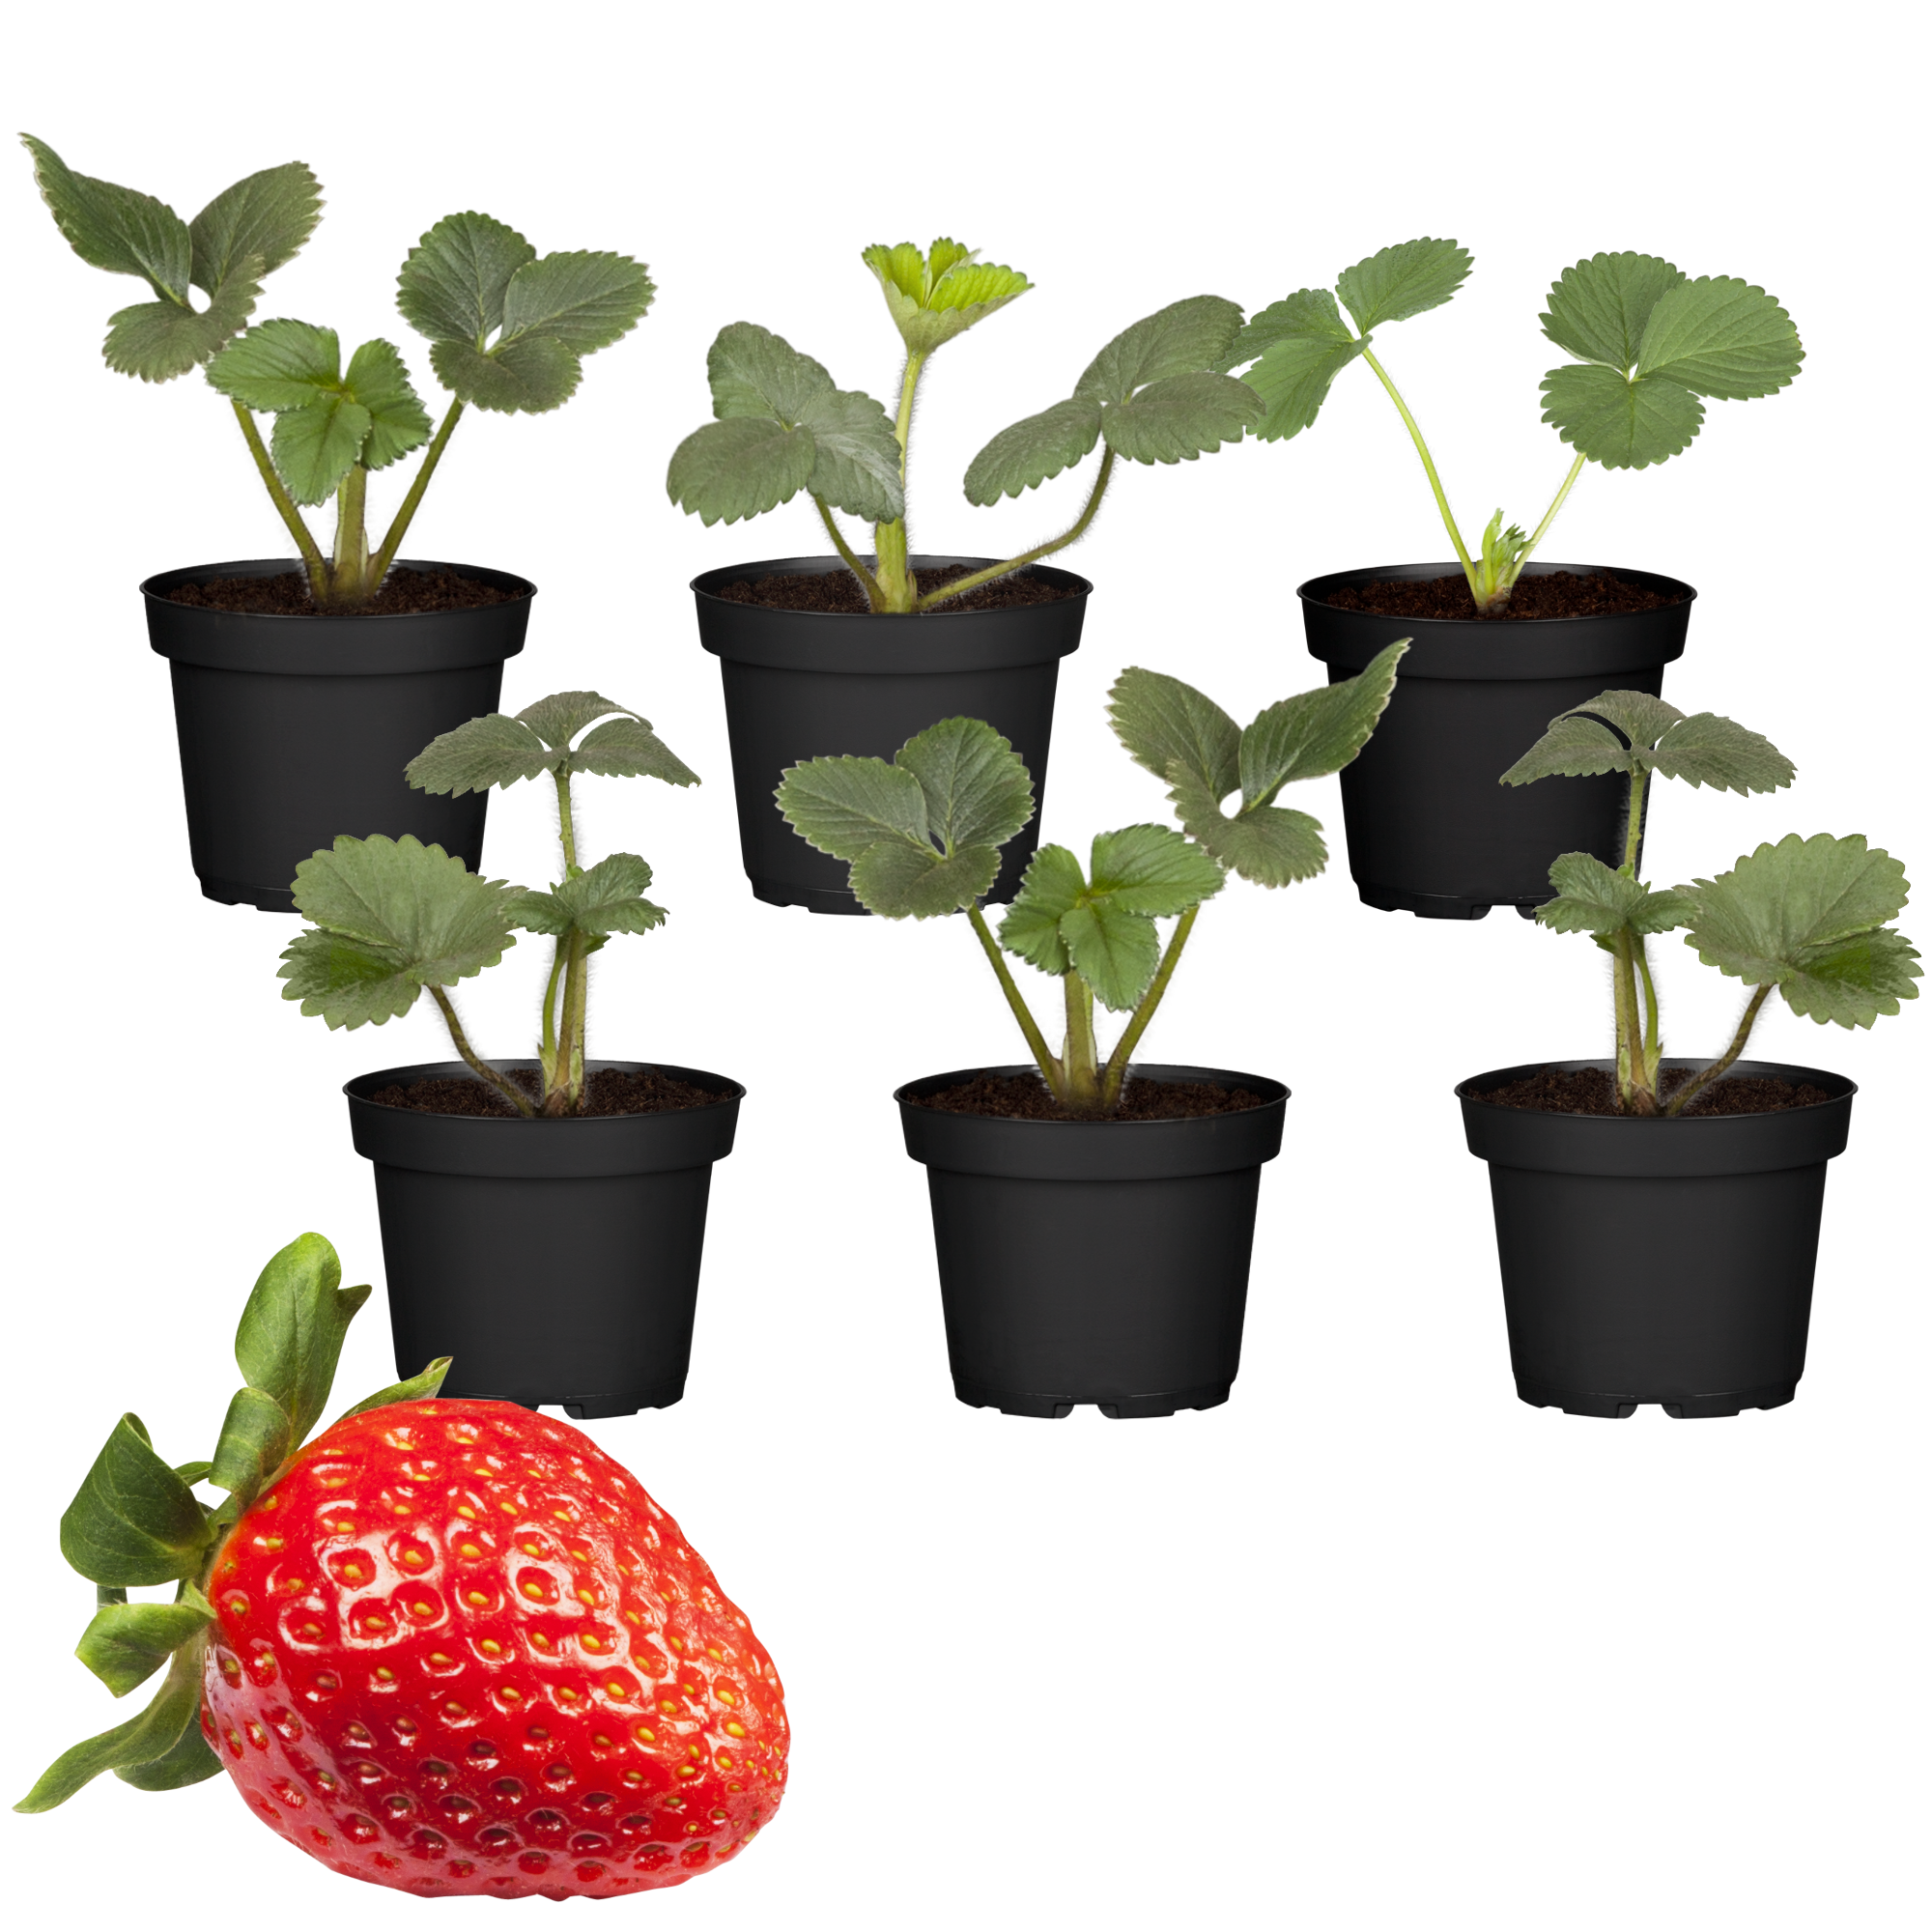 Erdbeere 'Senga Sengana' 9 cm Topf, 6er-Set + product picture